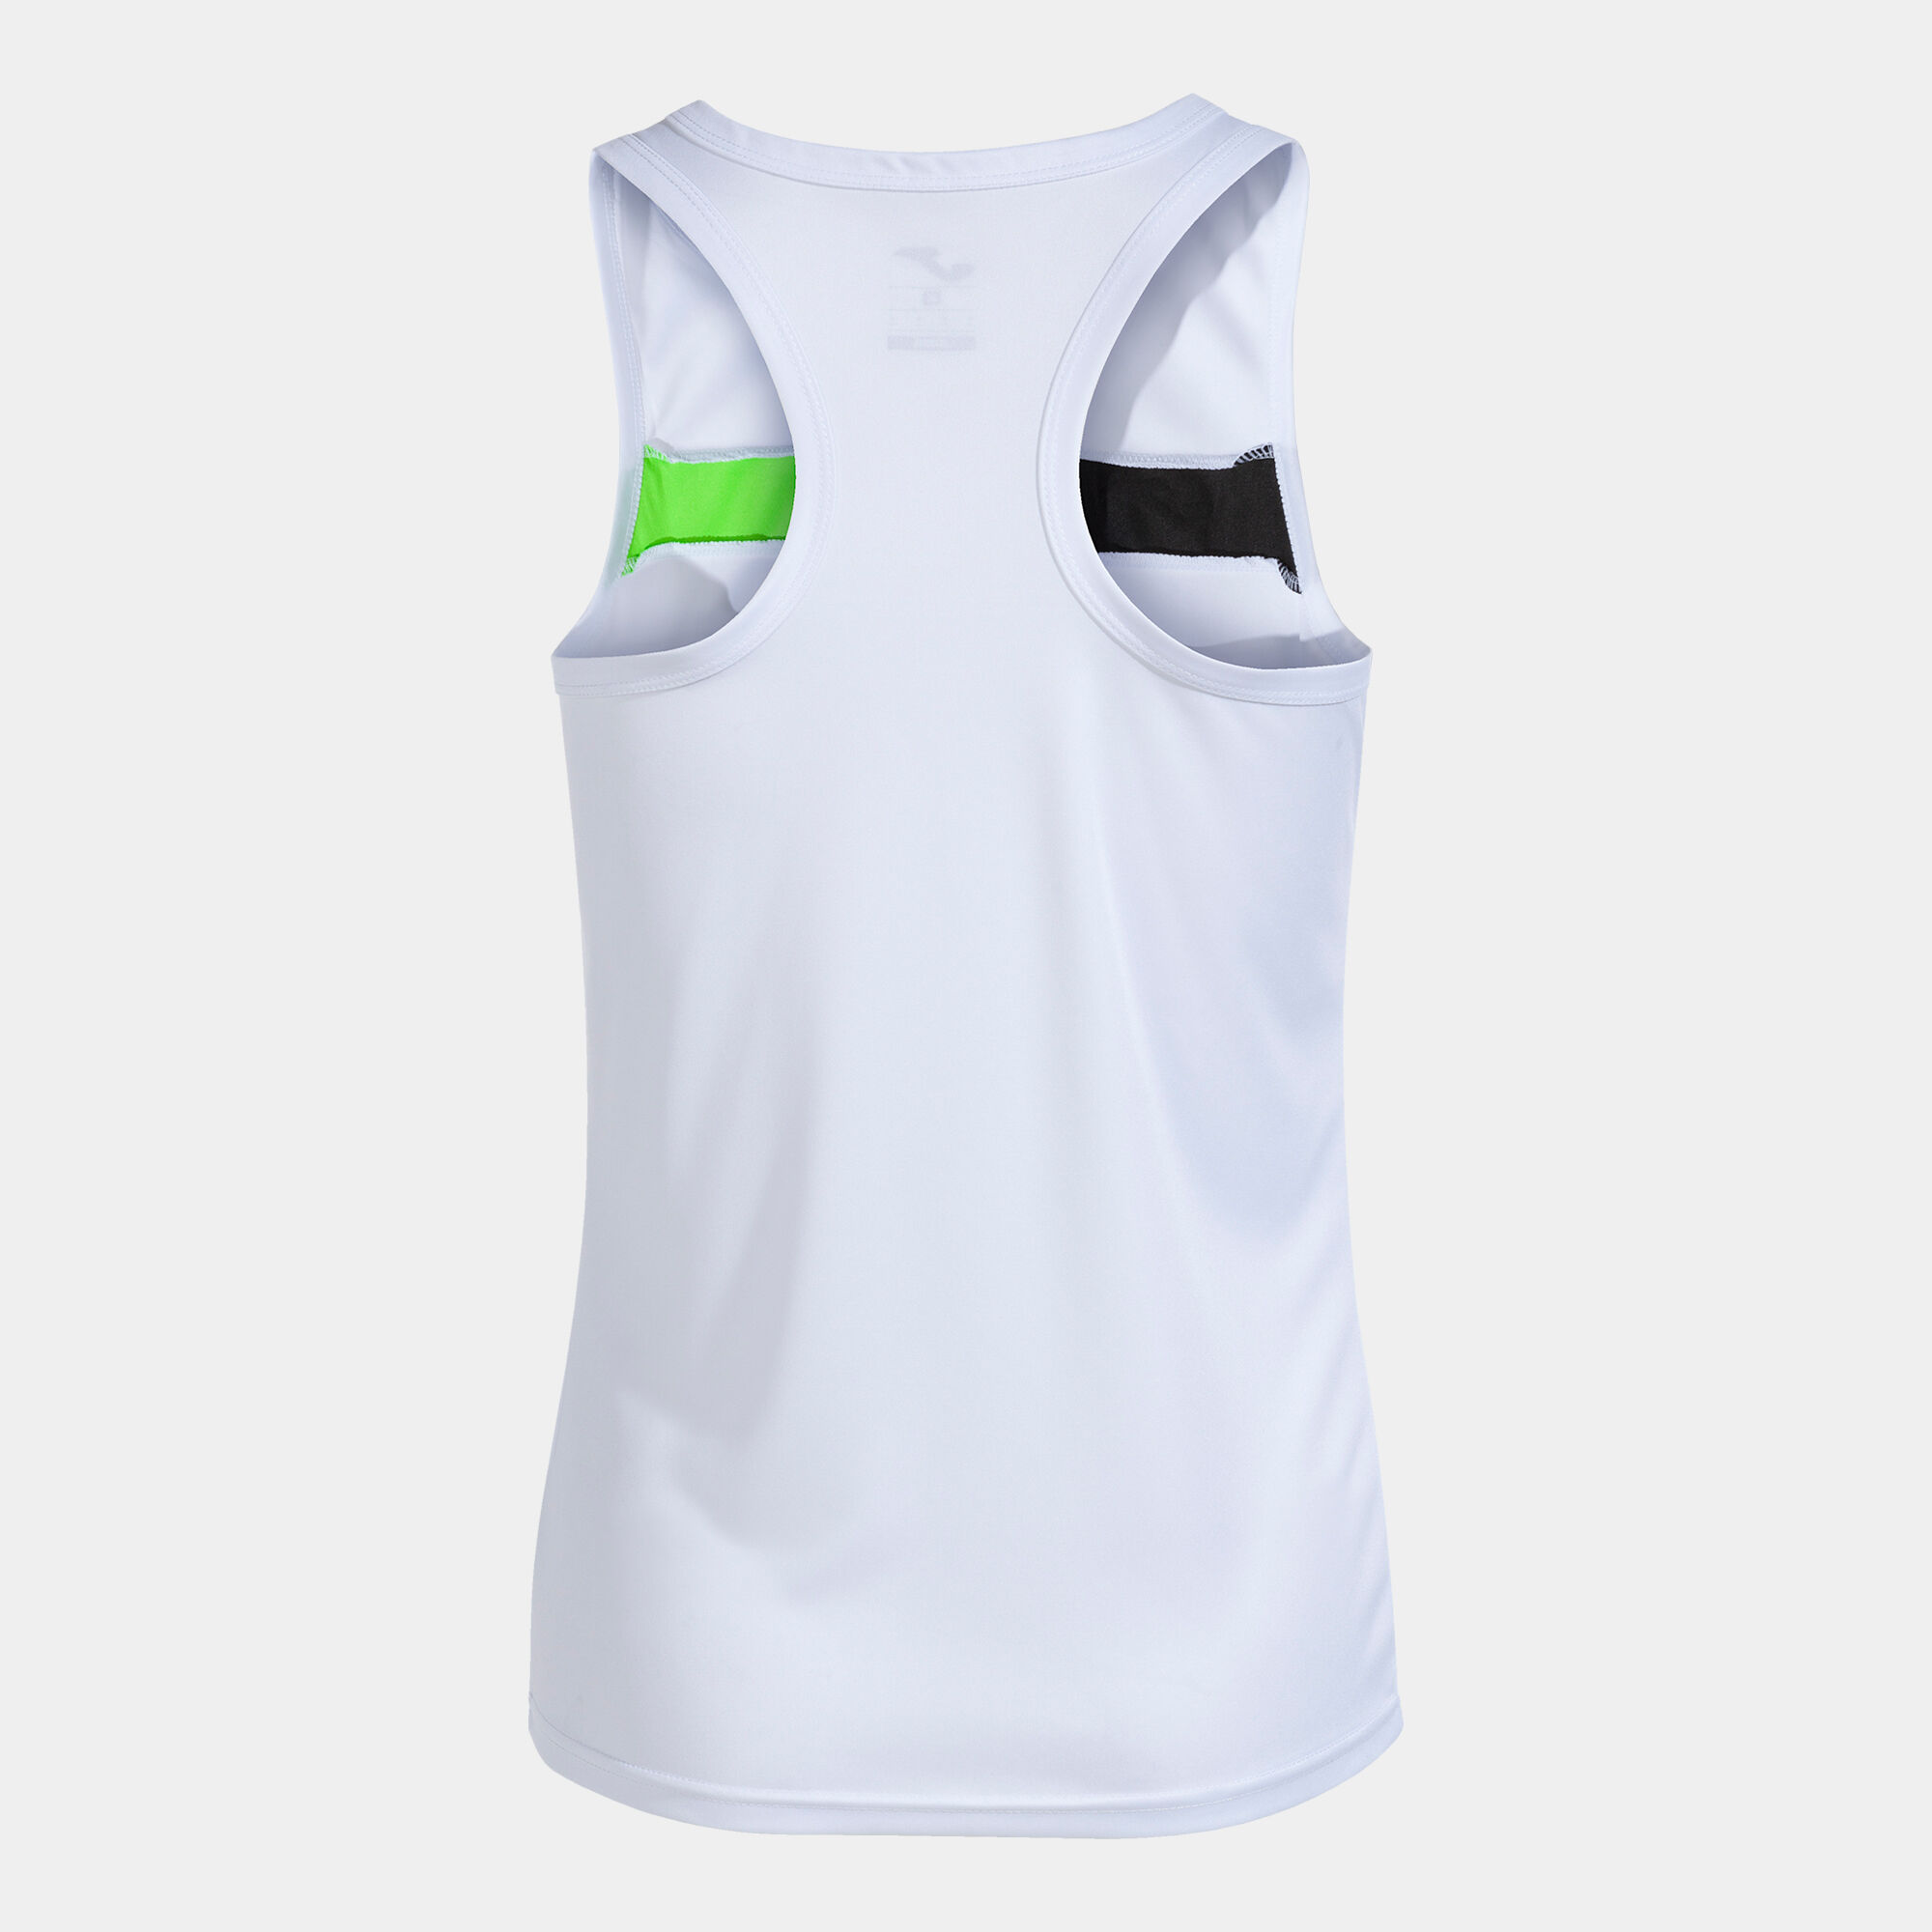 T-shirt de alça mulher Court branco verde fluorescente